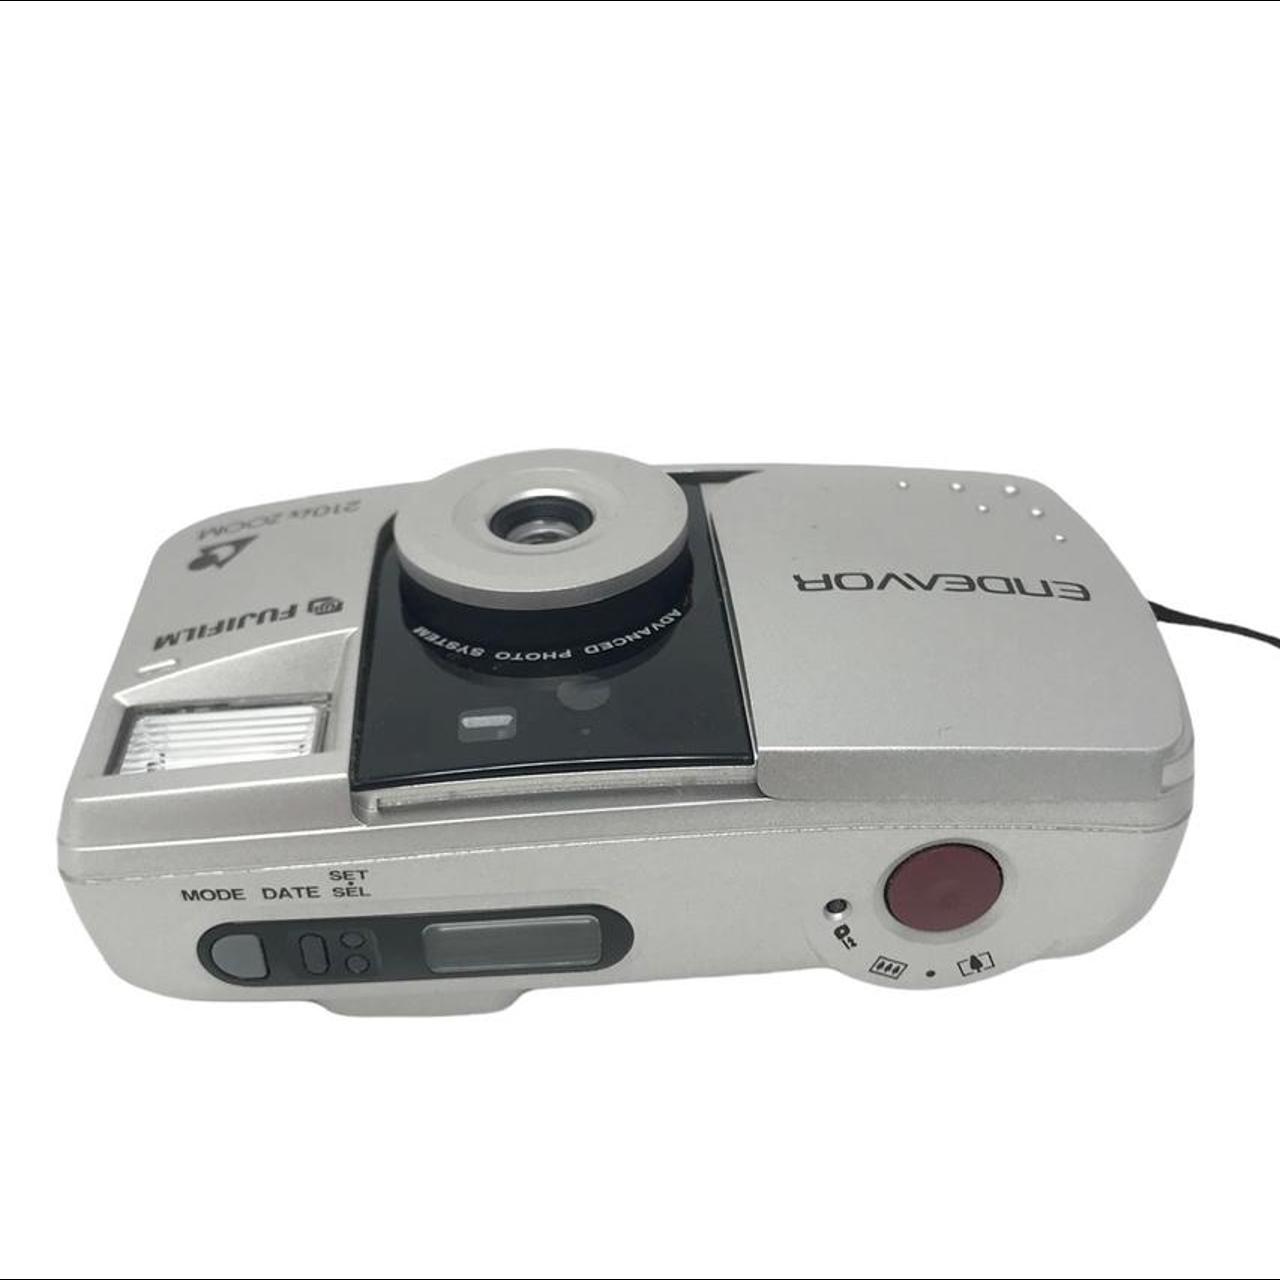 Product Image 3 - Fuji Fujifilm Endeavor Film Camera

New